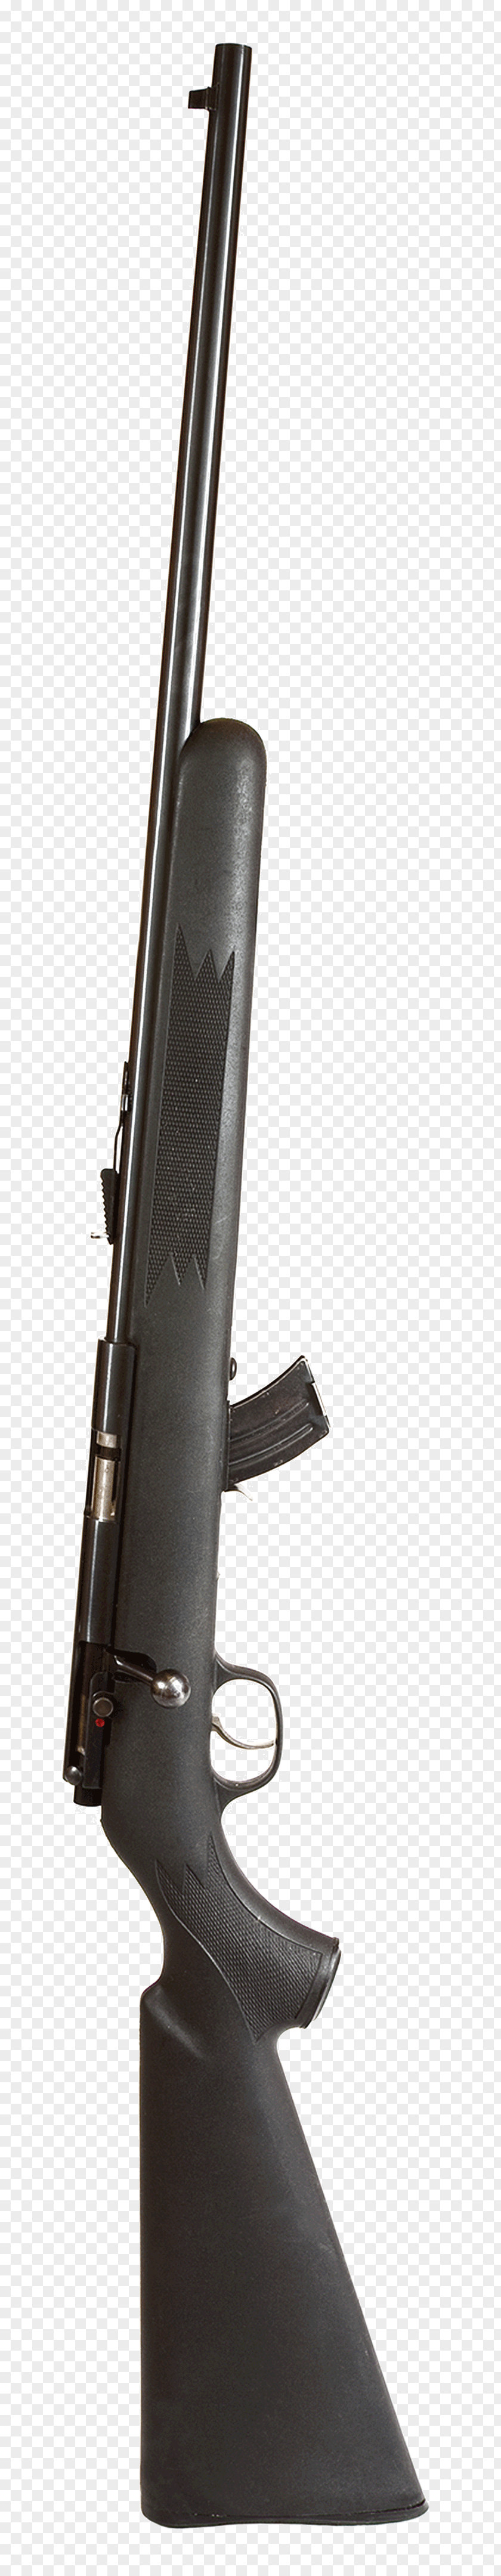 Sniper Rifle Weapon Military Shotgun PNG rifle Shotgun, combat sniper clipart PNG